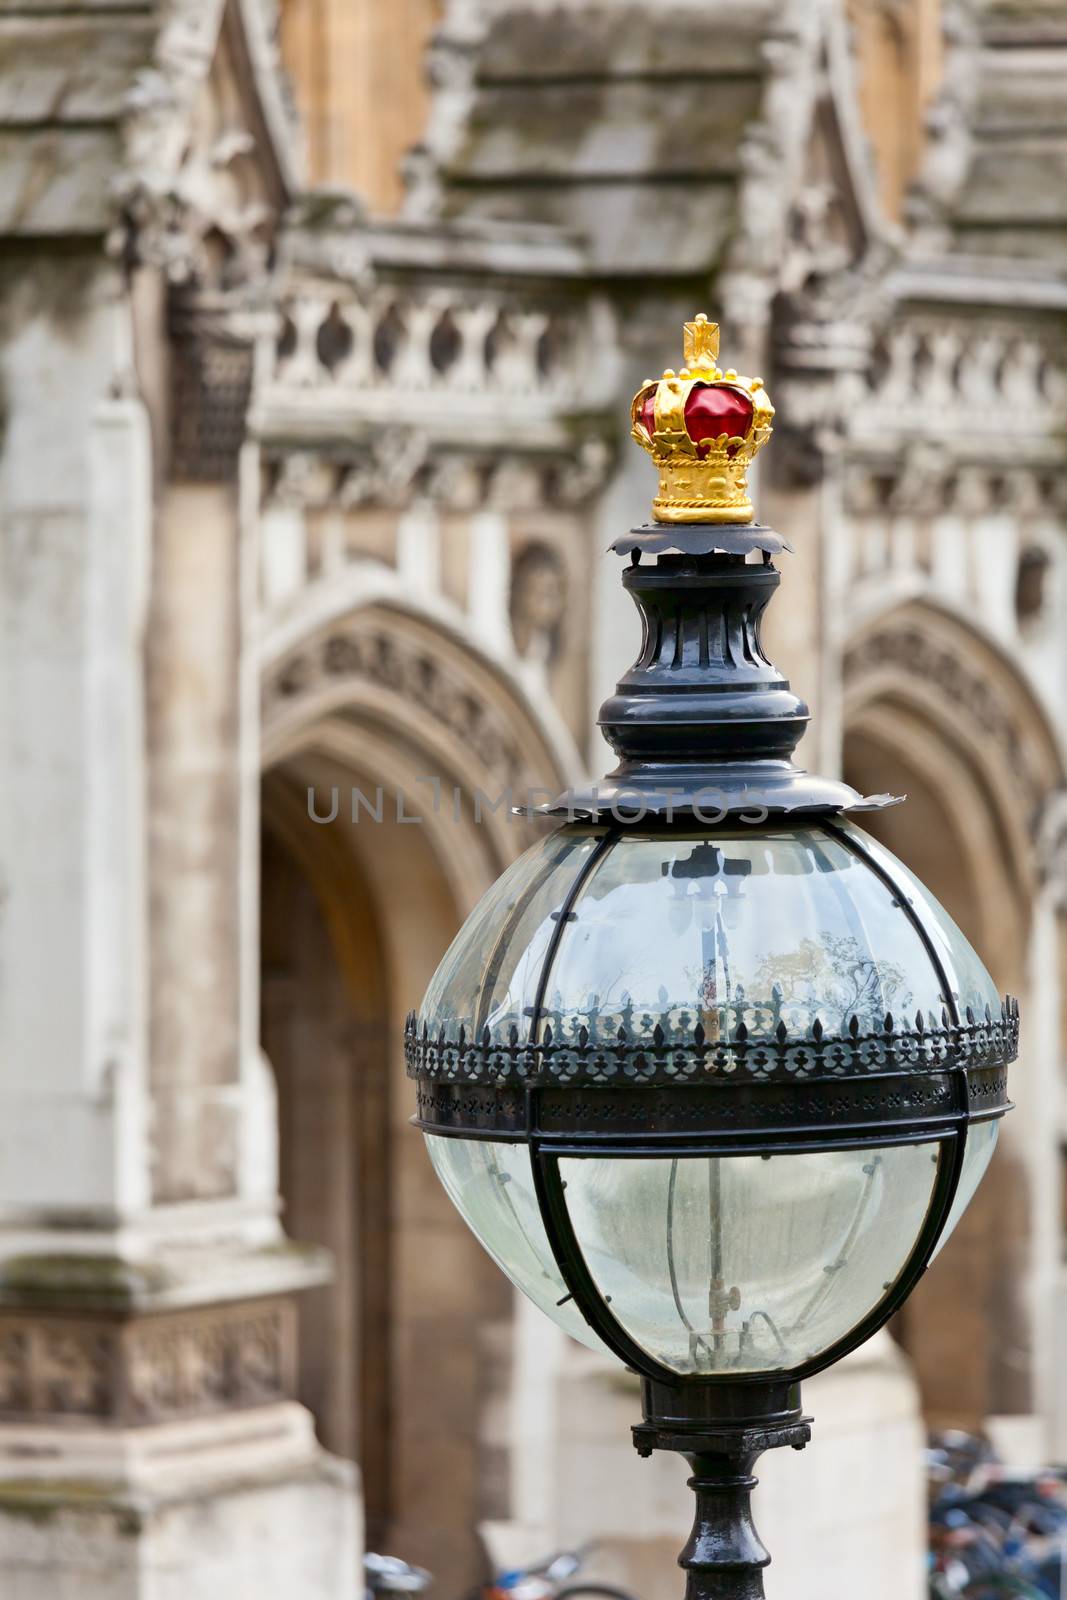 London street lamp by naumoid